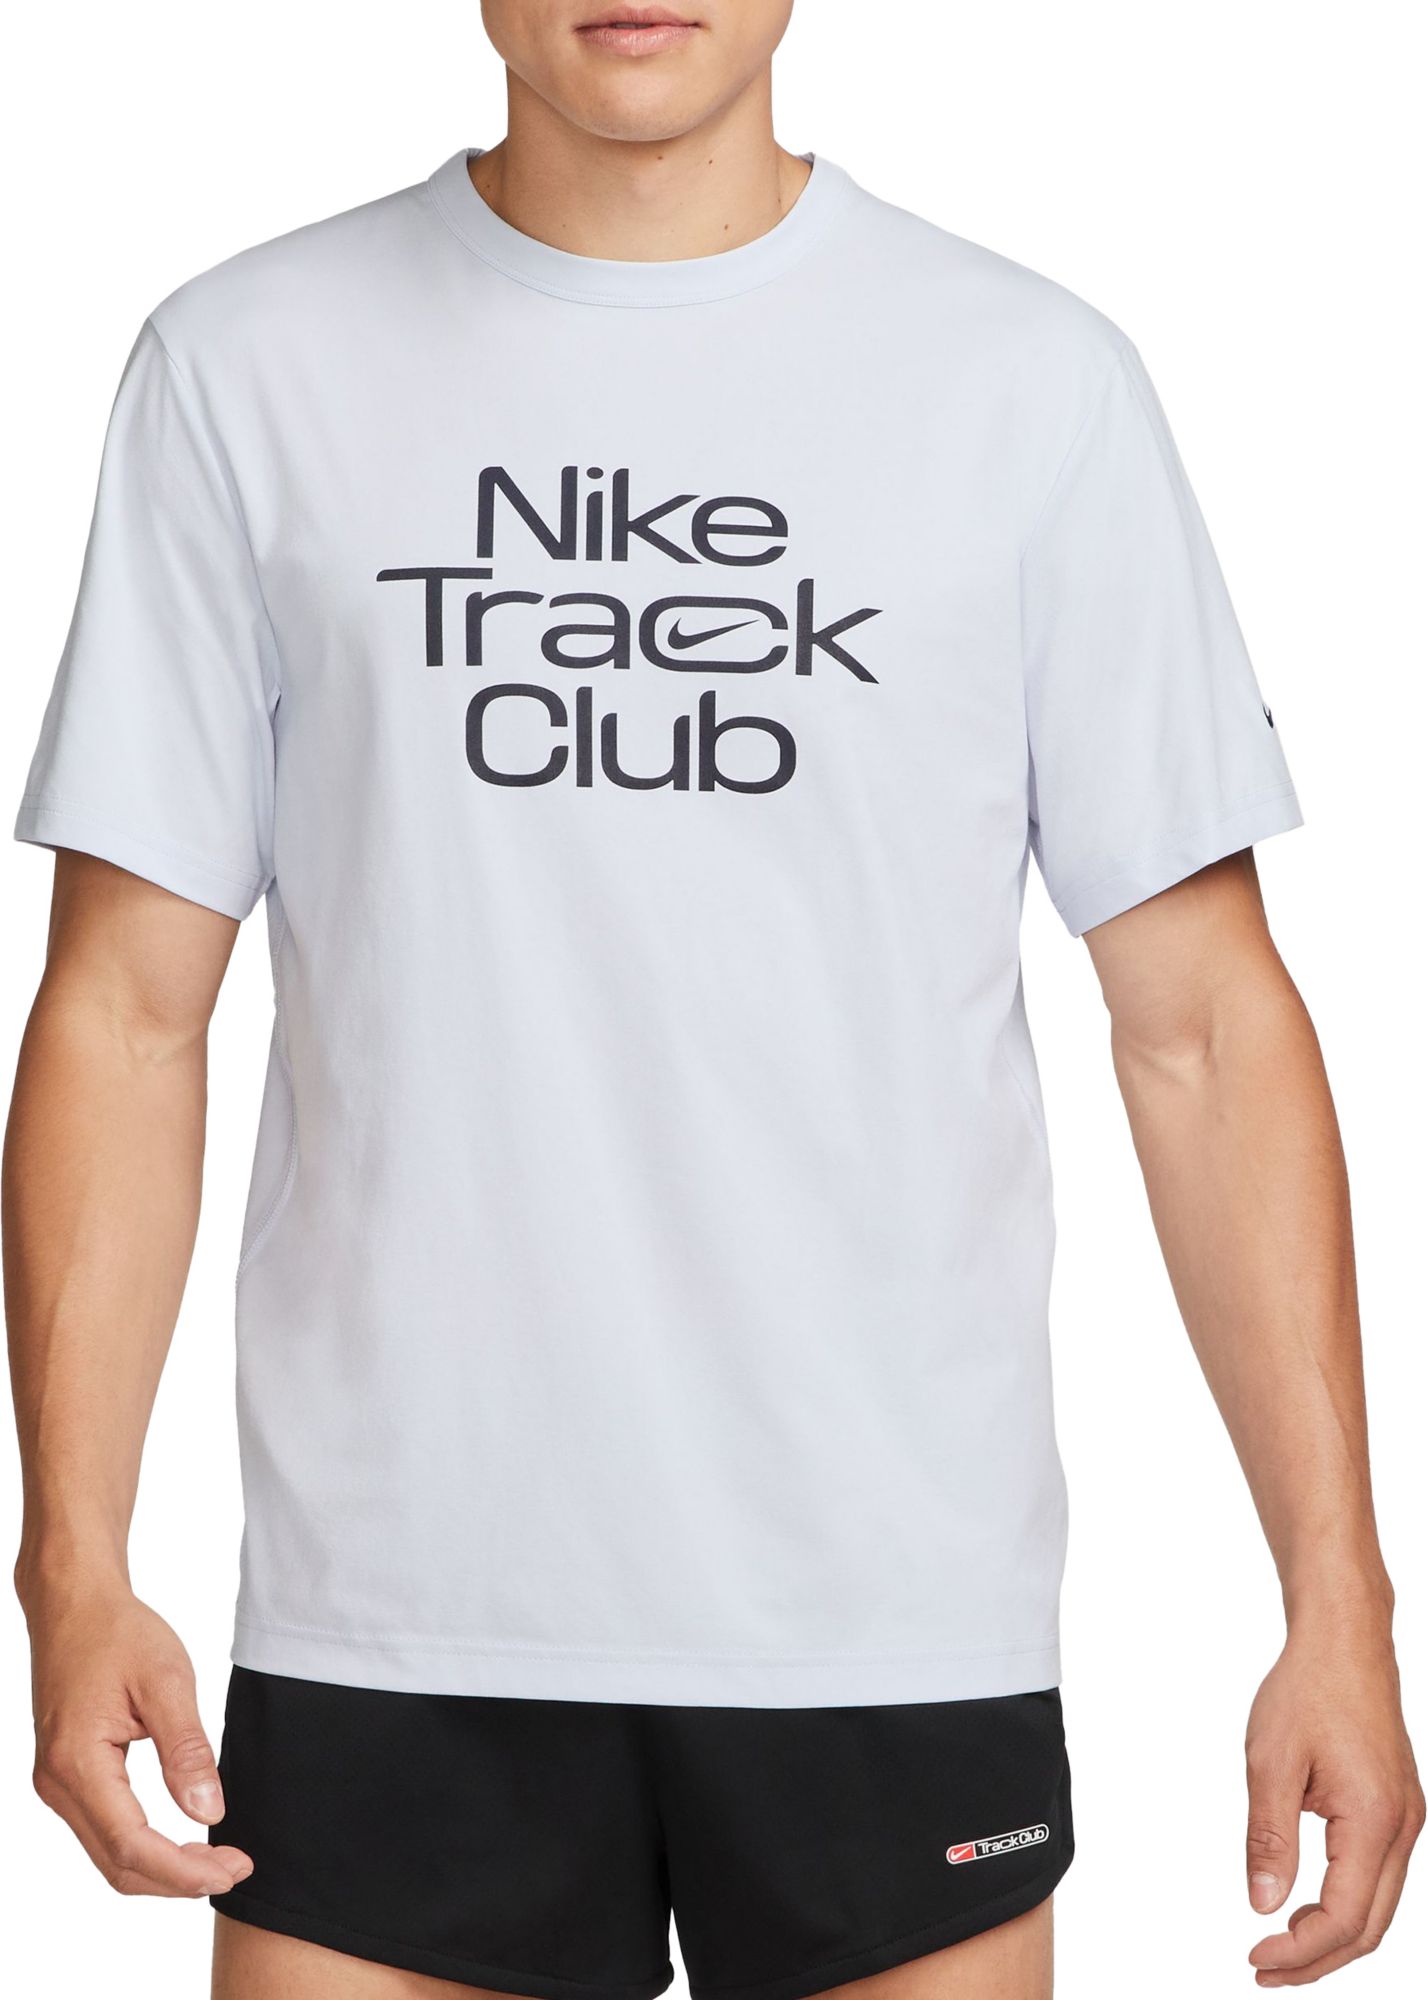 Nike Mens Dri-FIT Hyverse Track Club Short Sleeve Running Graphic T-Shirt